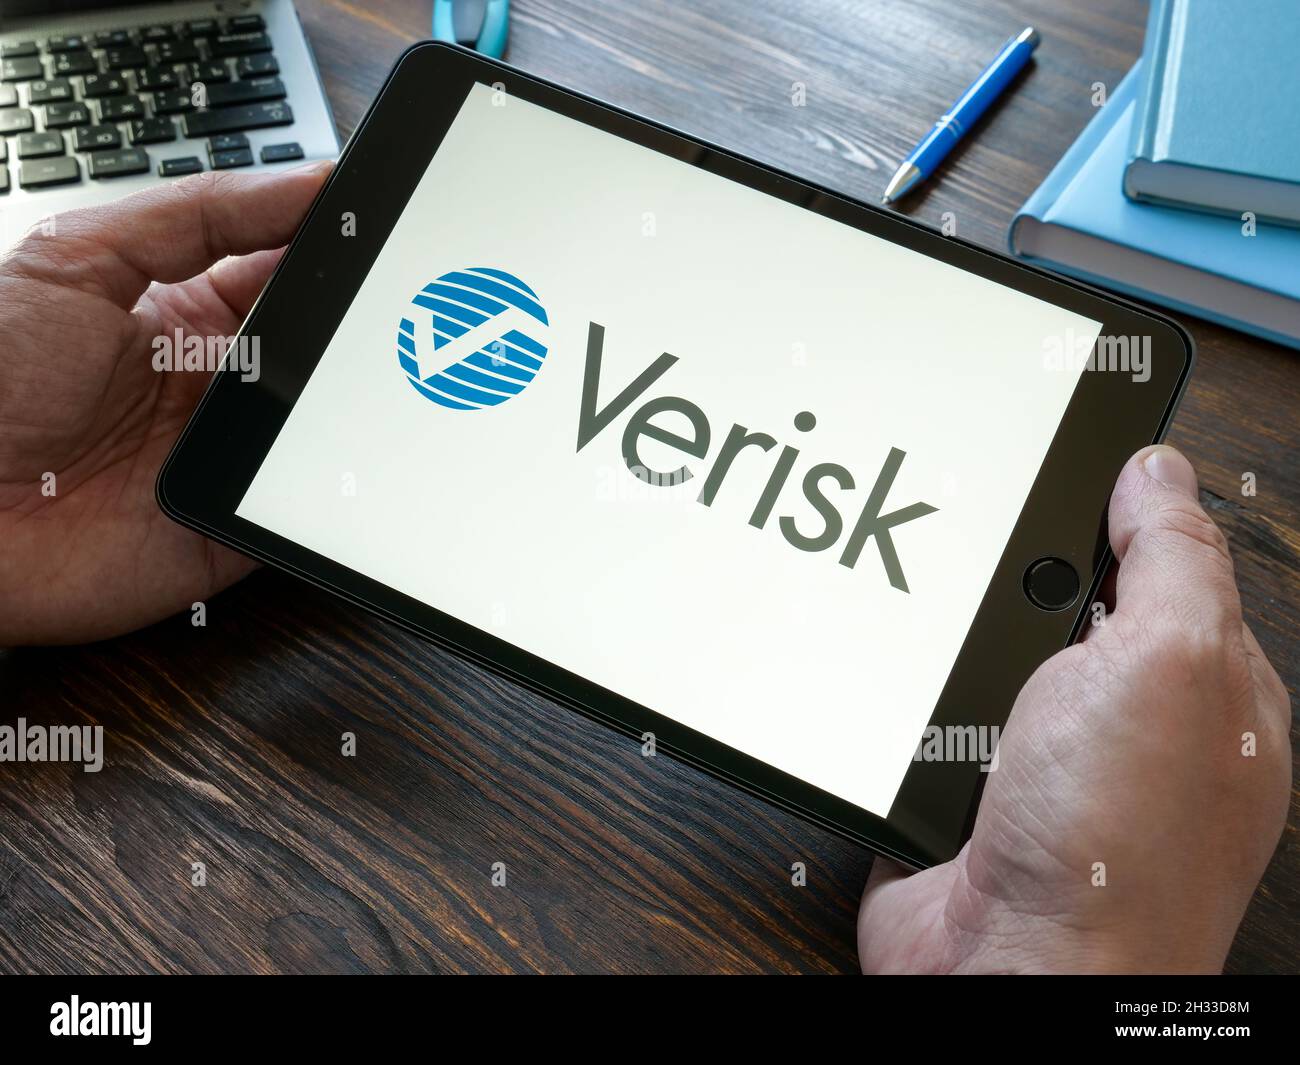 KYIV, UKRAINE - October 20, 2021. Hands holds tablet with Verisk Analytics logo. Stock Photo